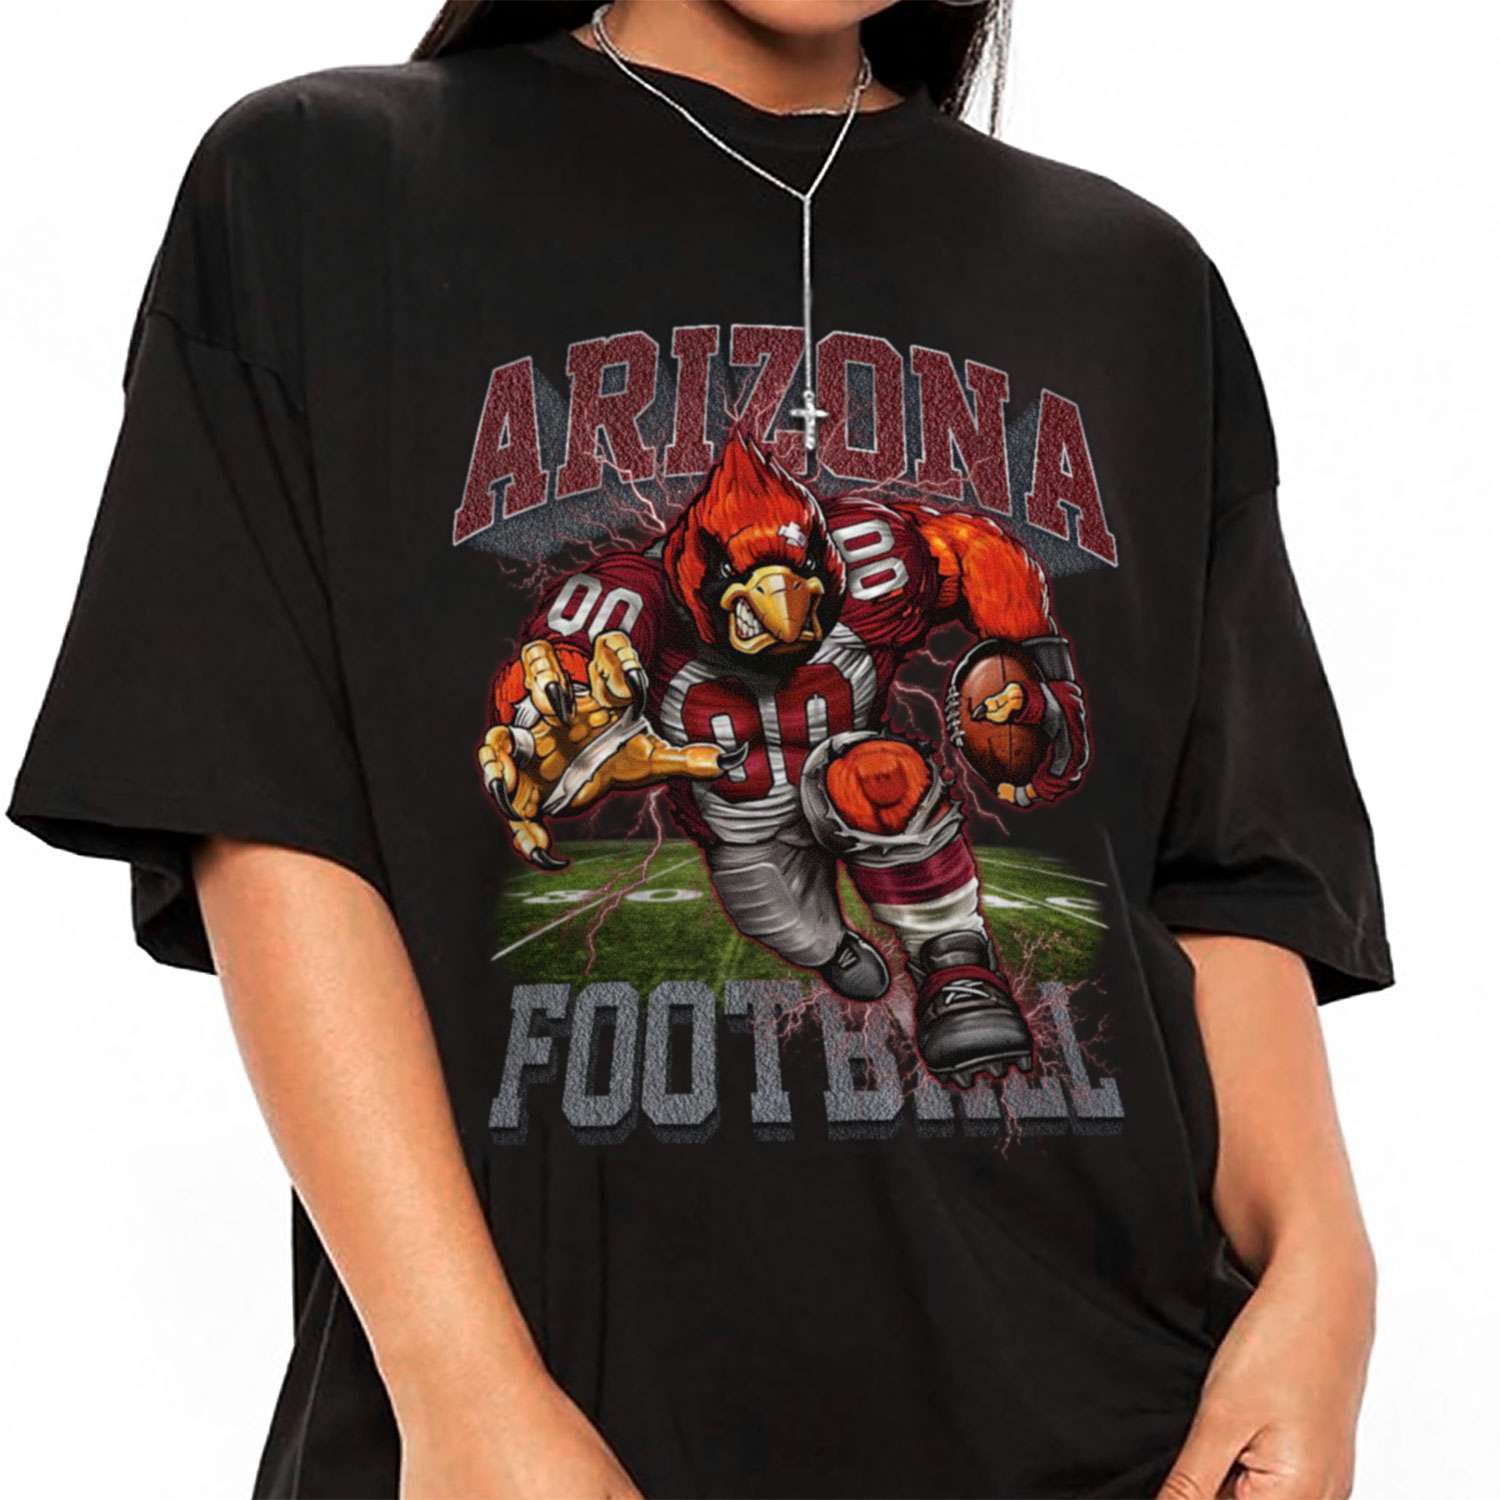 Vintage Football Team Arizona Cardinals Established In 1898 T-Shirt - Cruel  Ball